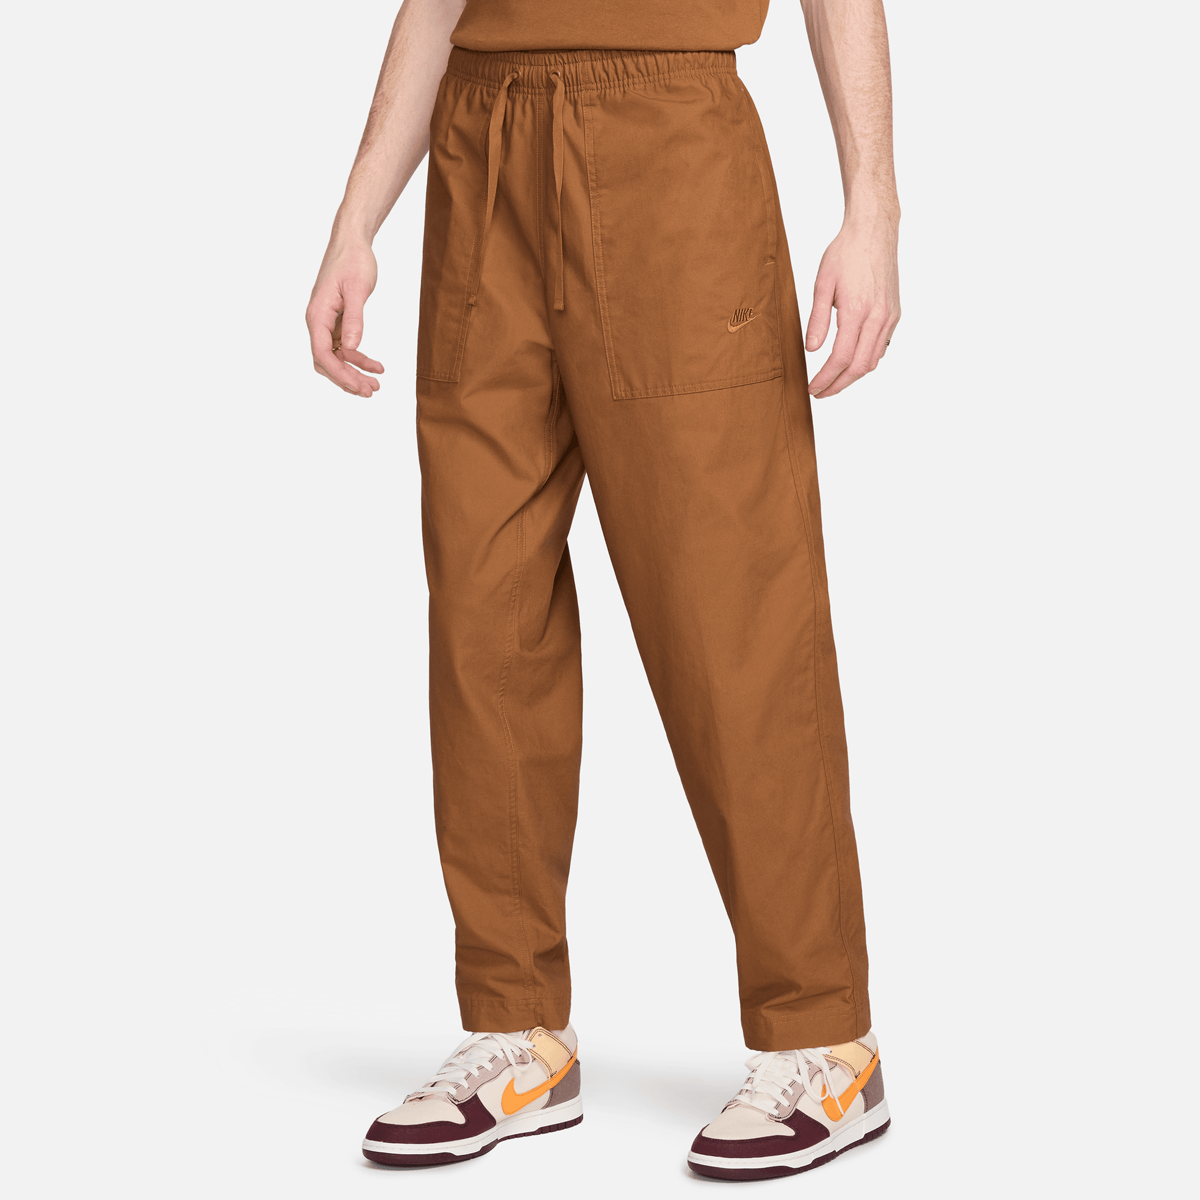 Club Barcelona Pants, NIKE, Apparel, british tan, taille: S